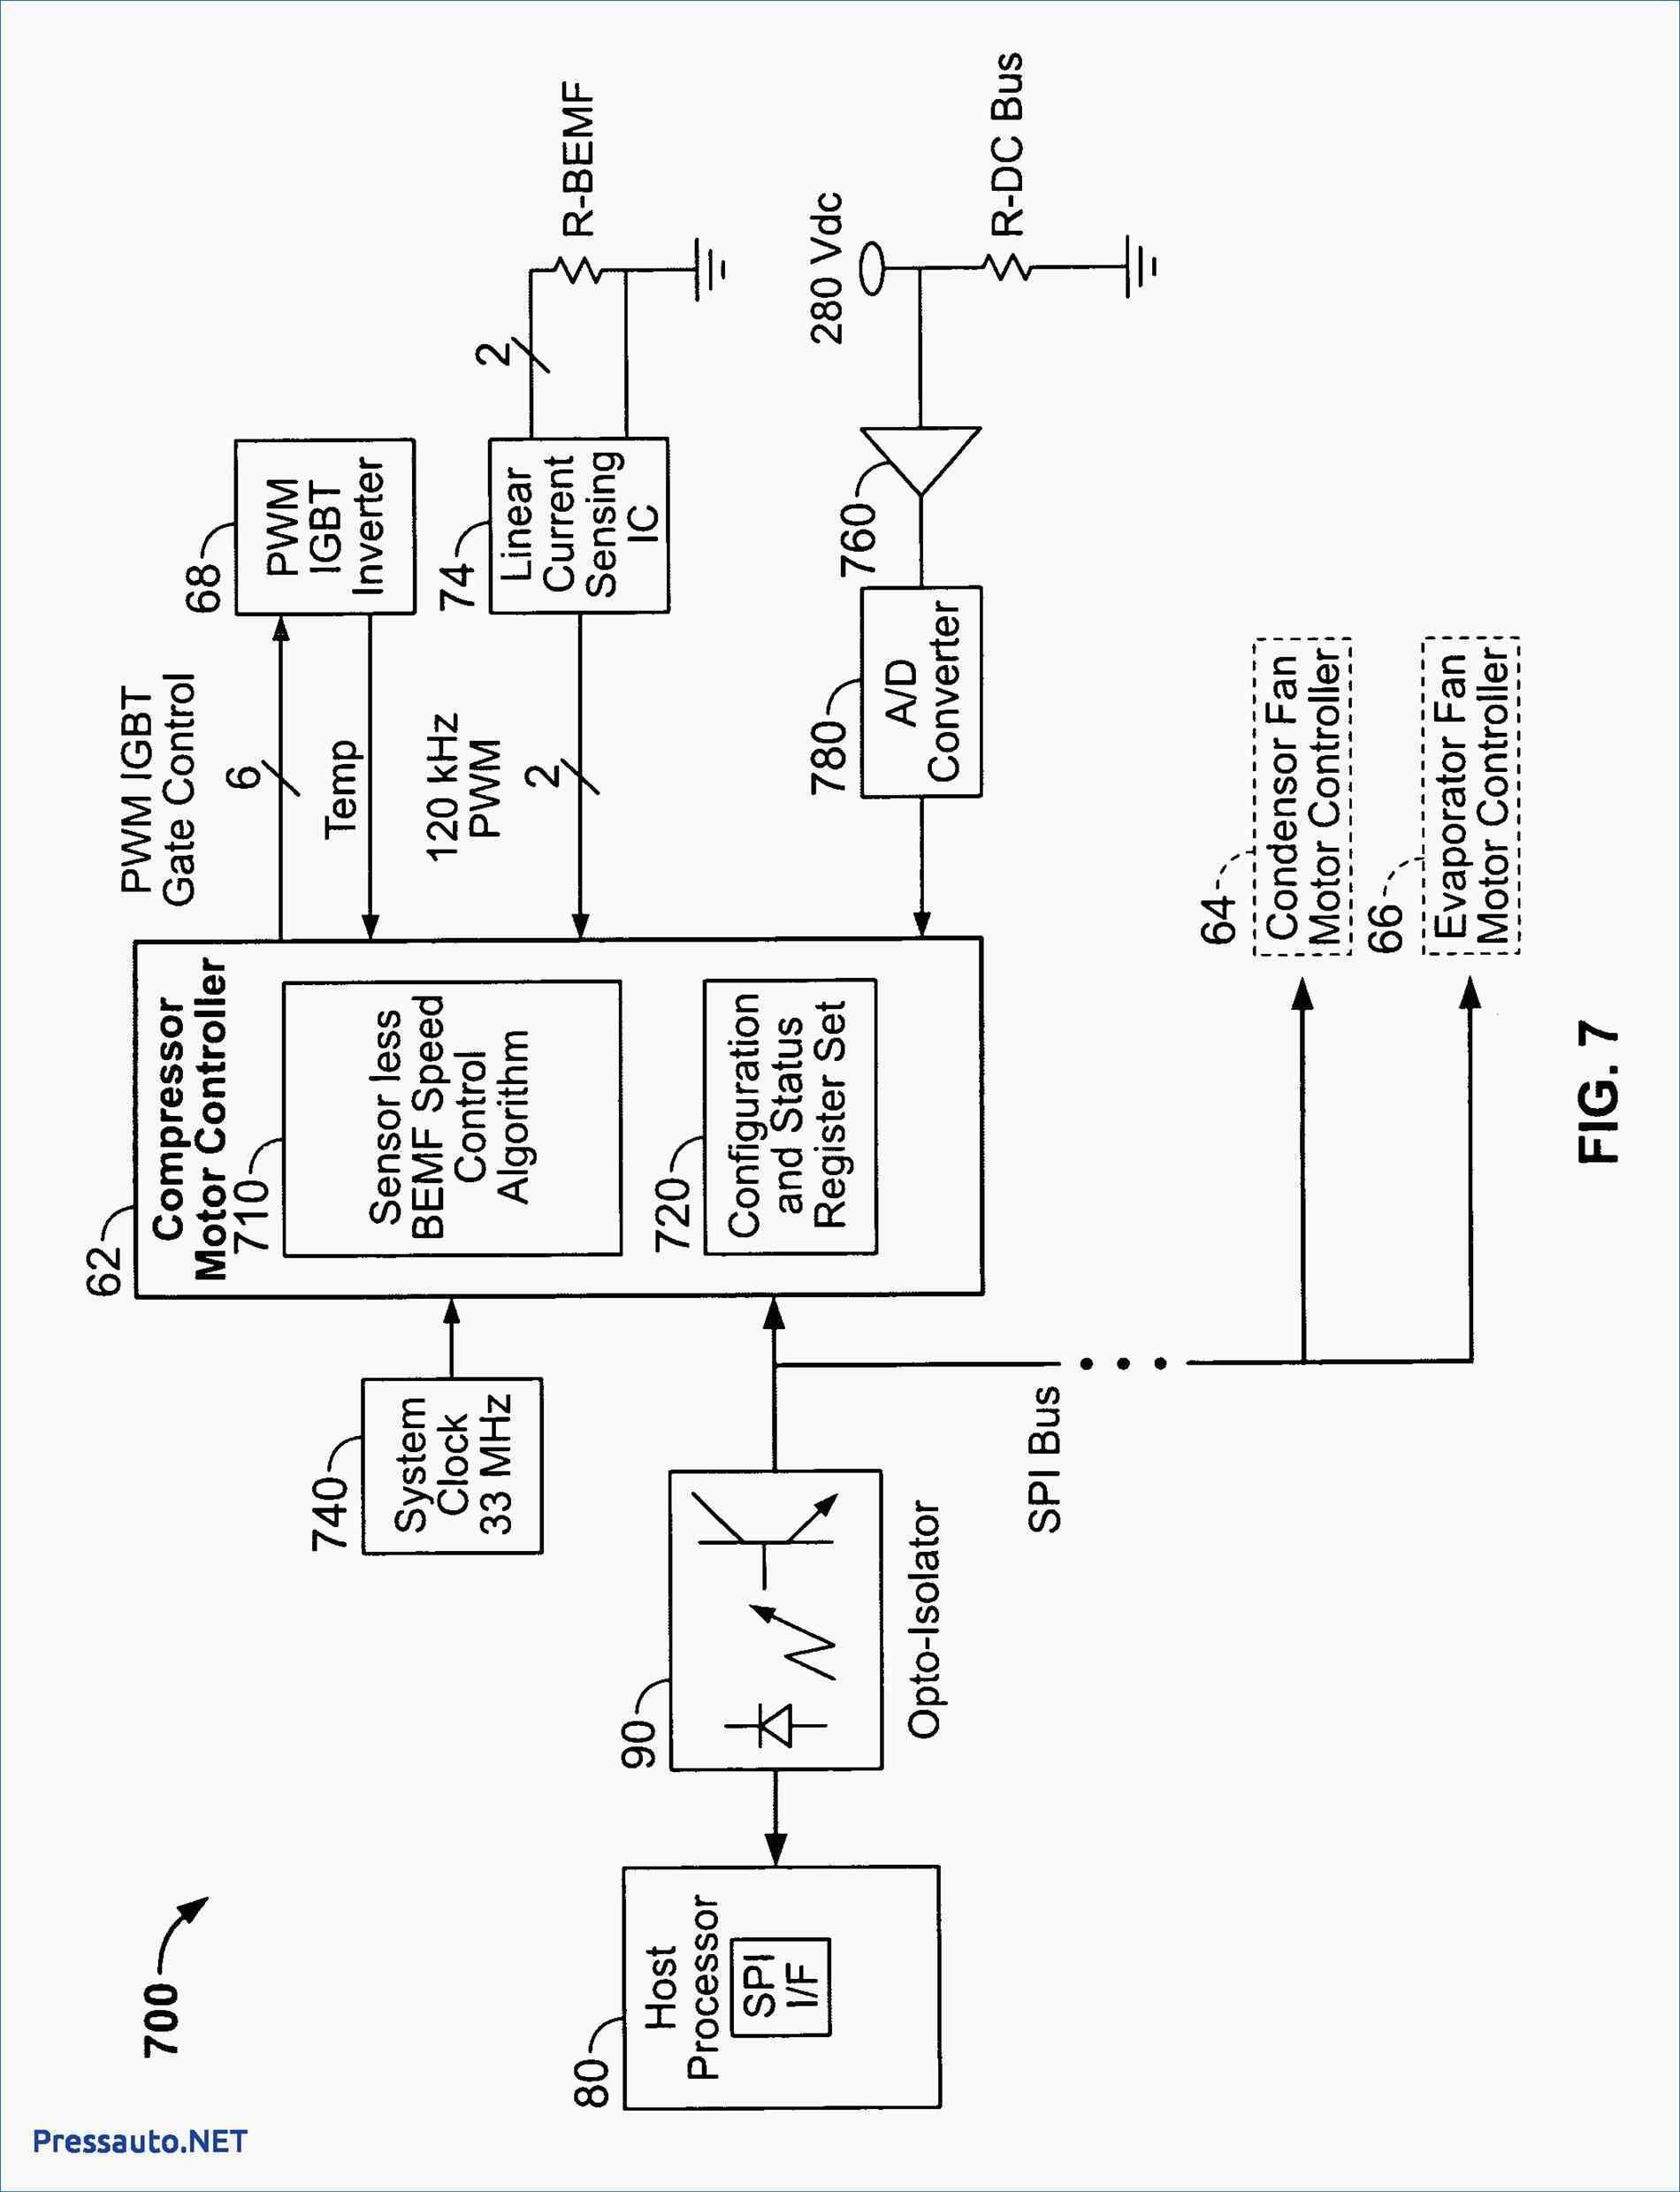 Exelent Sunpro Tach Wiring Diagram Electrical Ideas